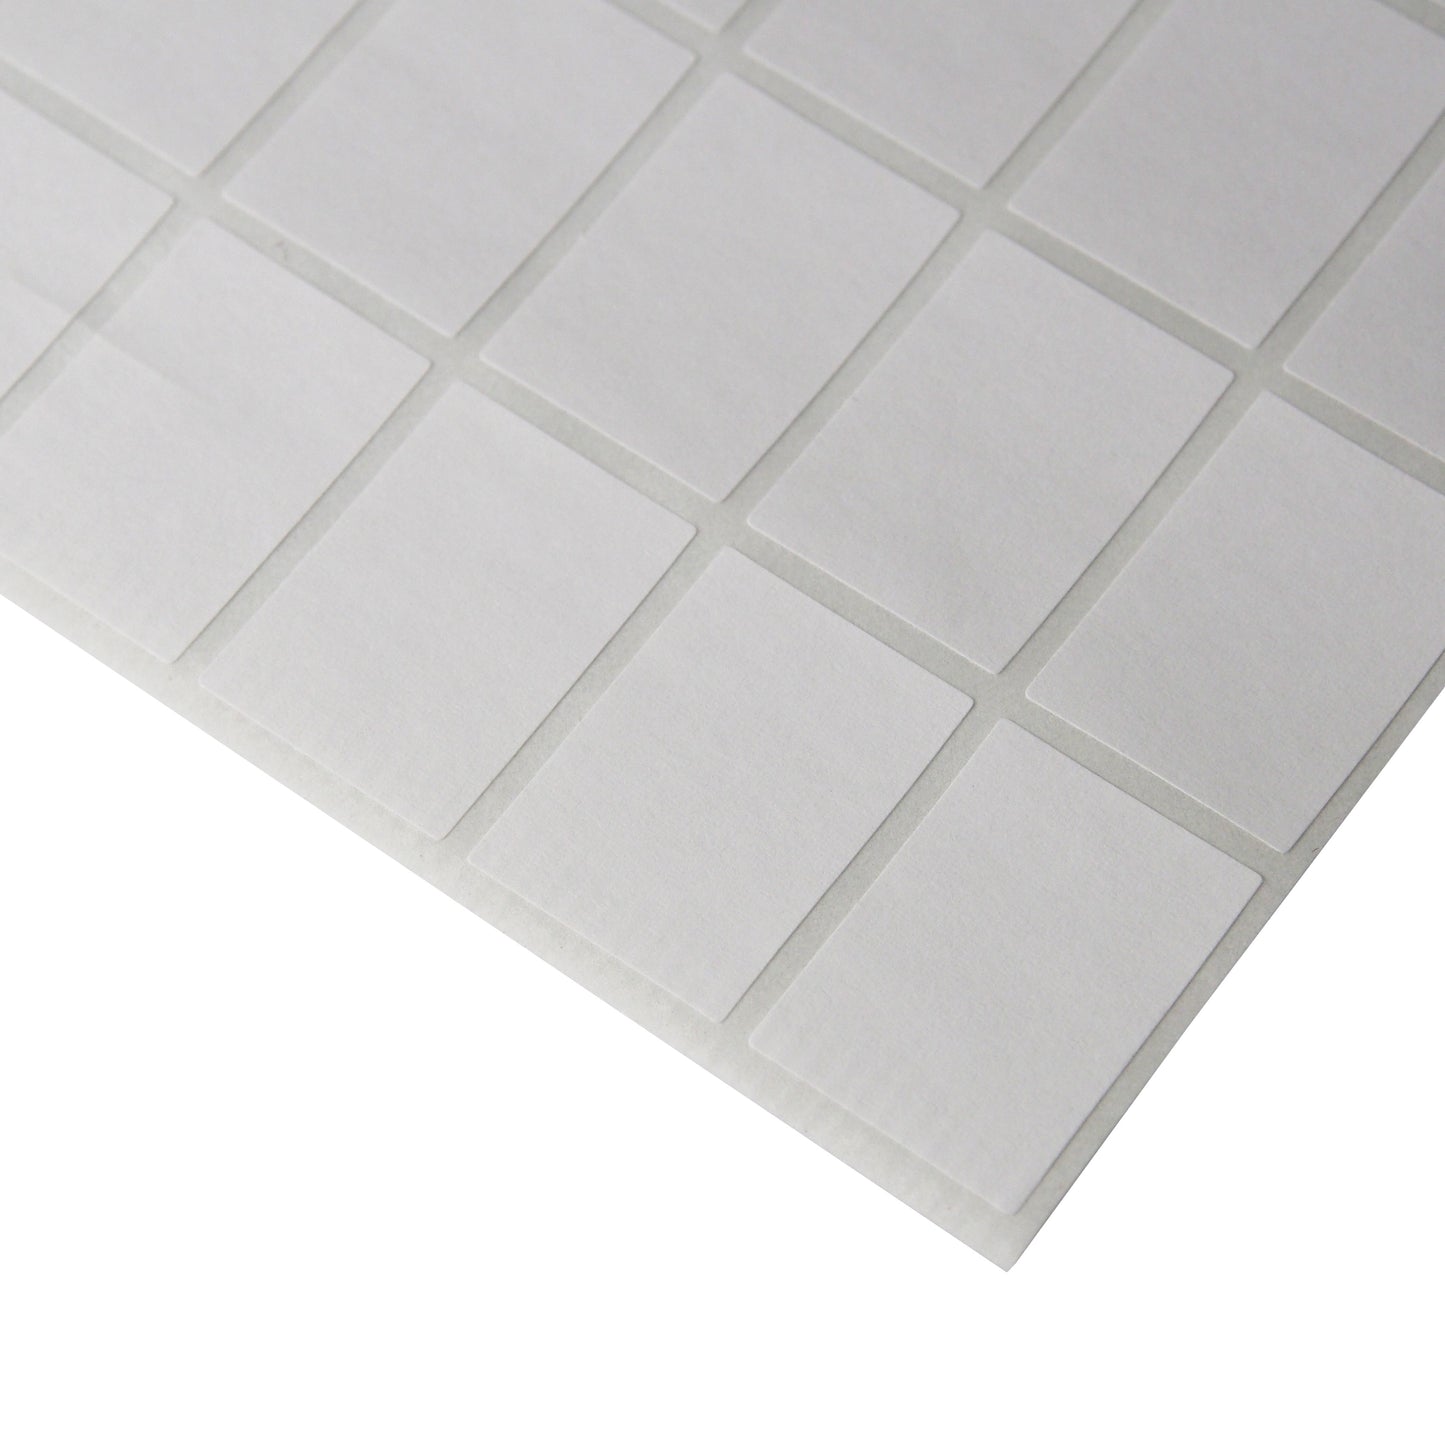 Corner of the sheet of Rectangular Self Adhesive Plain Labels - 1008 Labels (5/8" x 7/8")